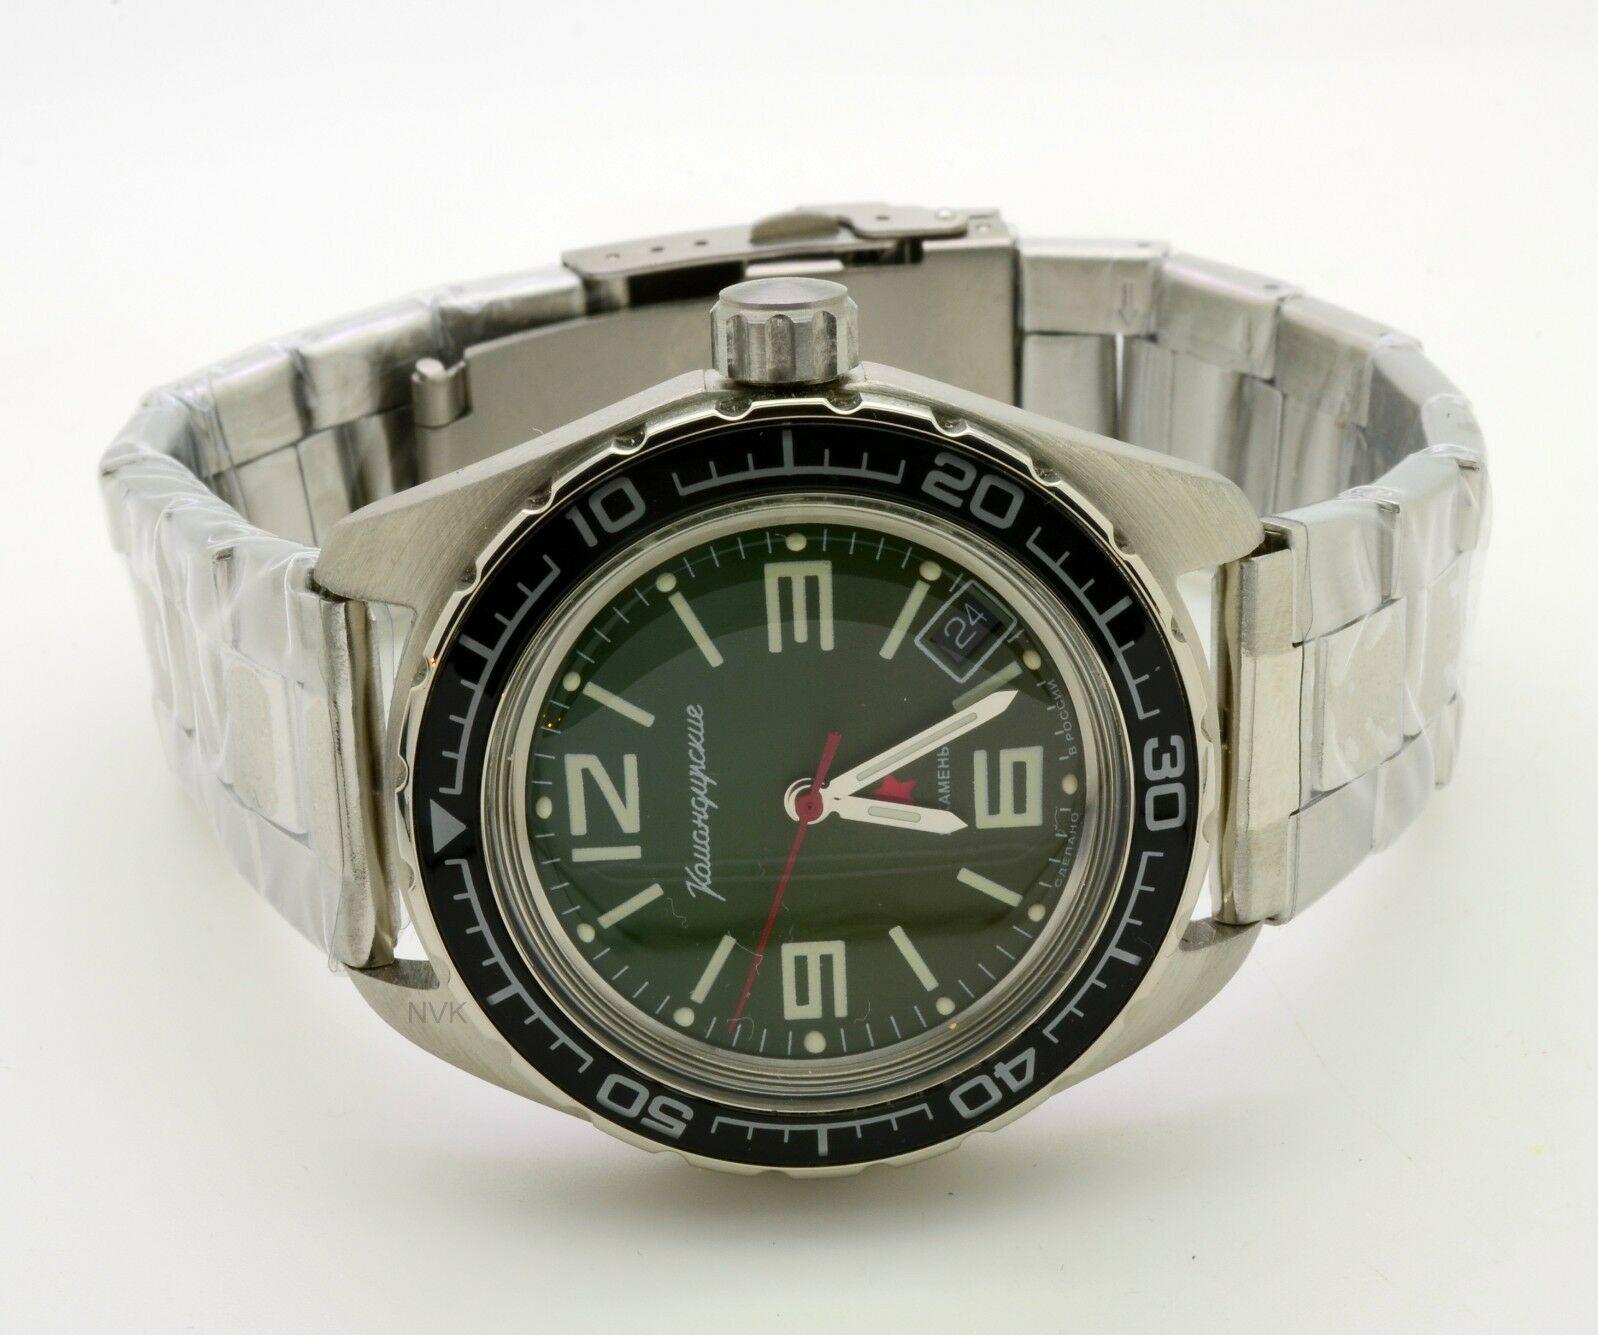 Vostok Komandirskie K-20 Automatic Watch 2416/020715 – Vostok